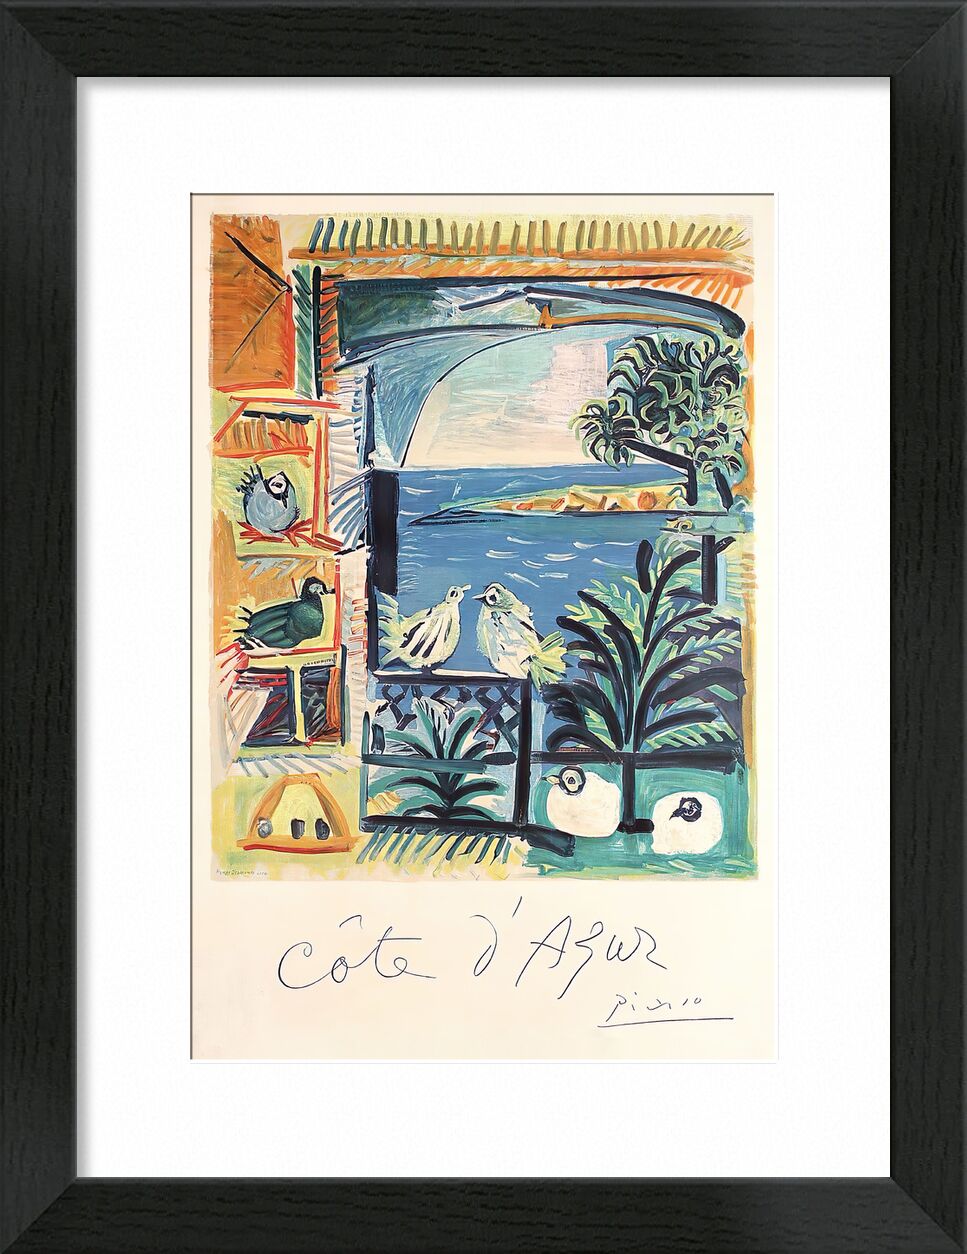 Côte d'Azur - The studio of Velazquez and his Pigeons - Picasso desde Bellas artes, Prodi Art, picasso, palomas, Costa azul, Francia, taller de pintura